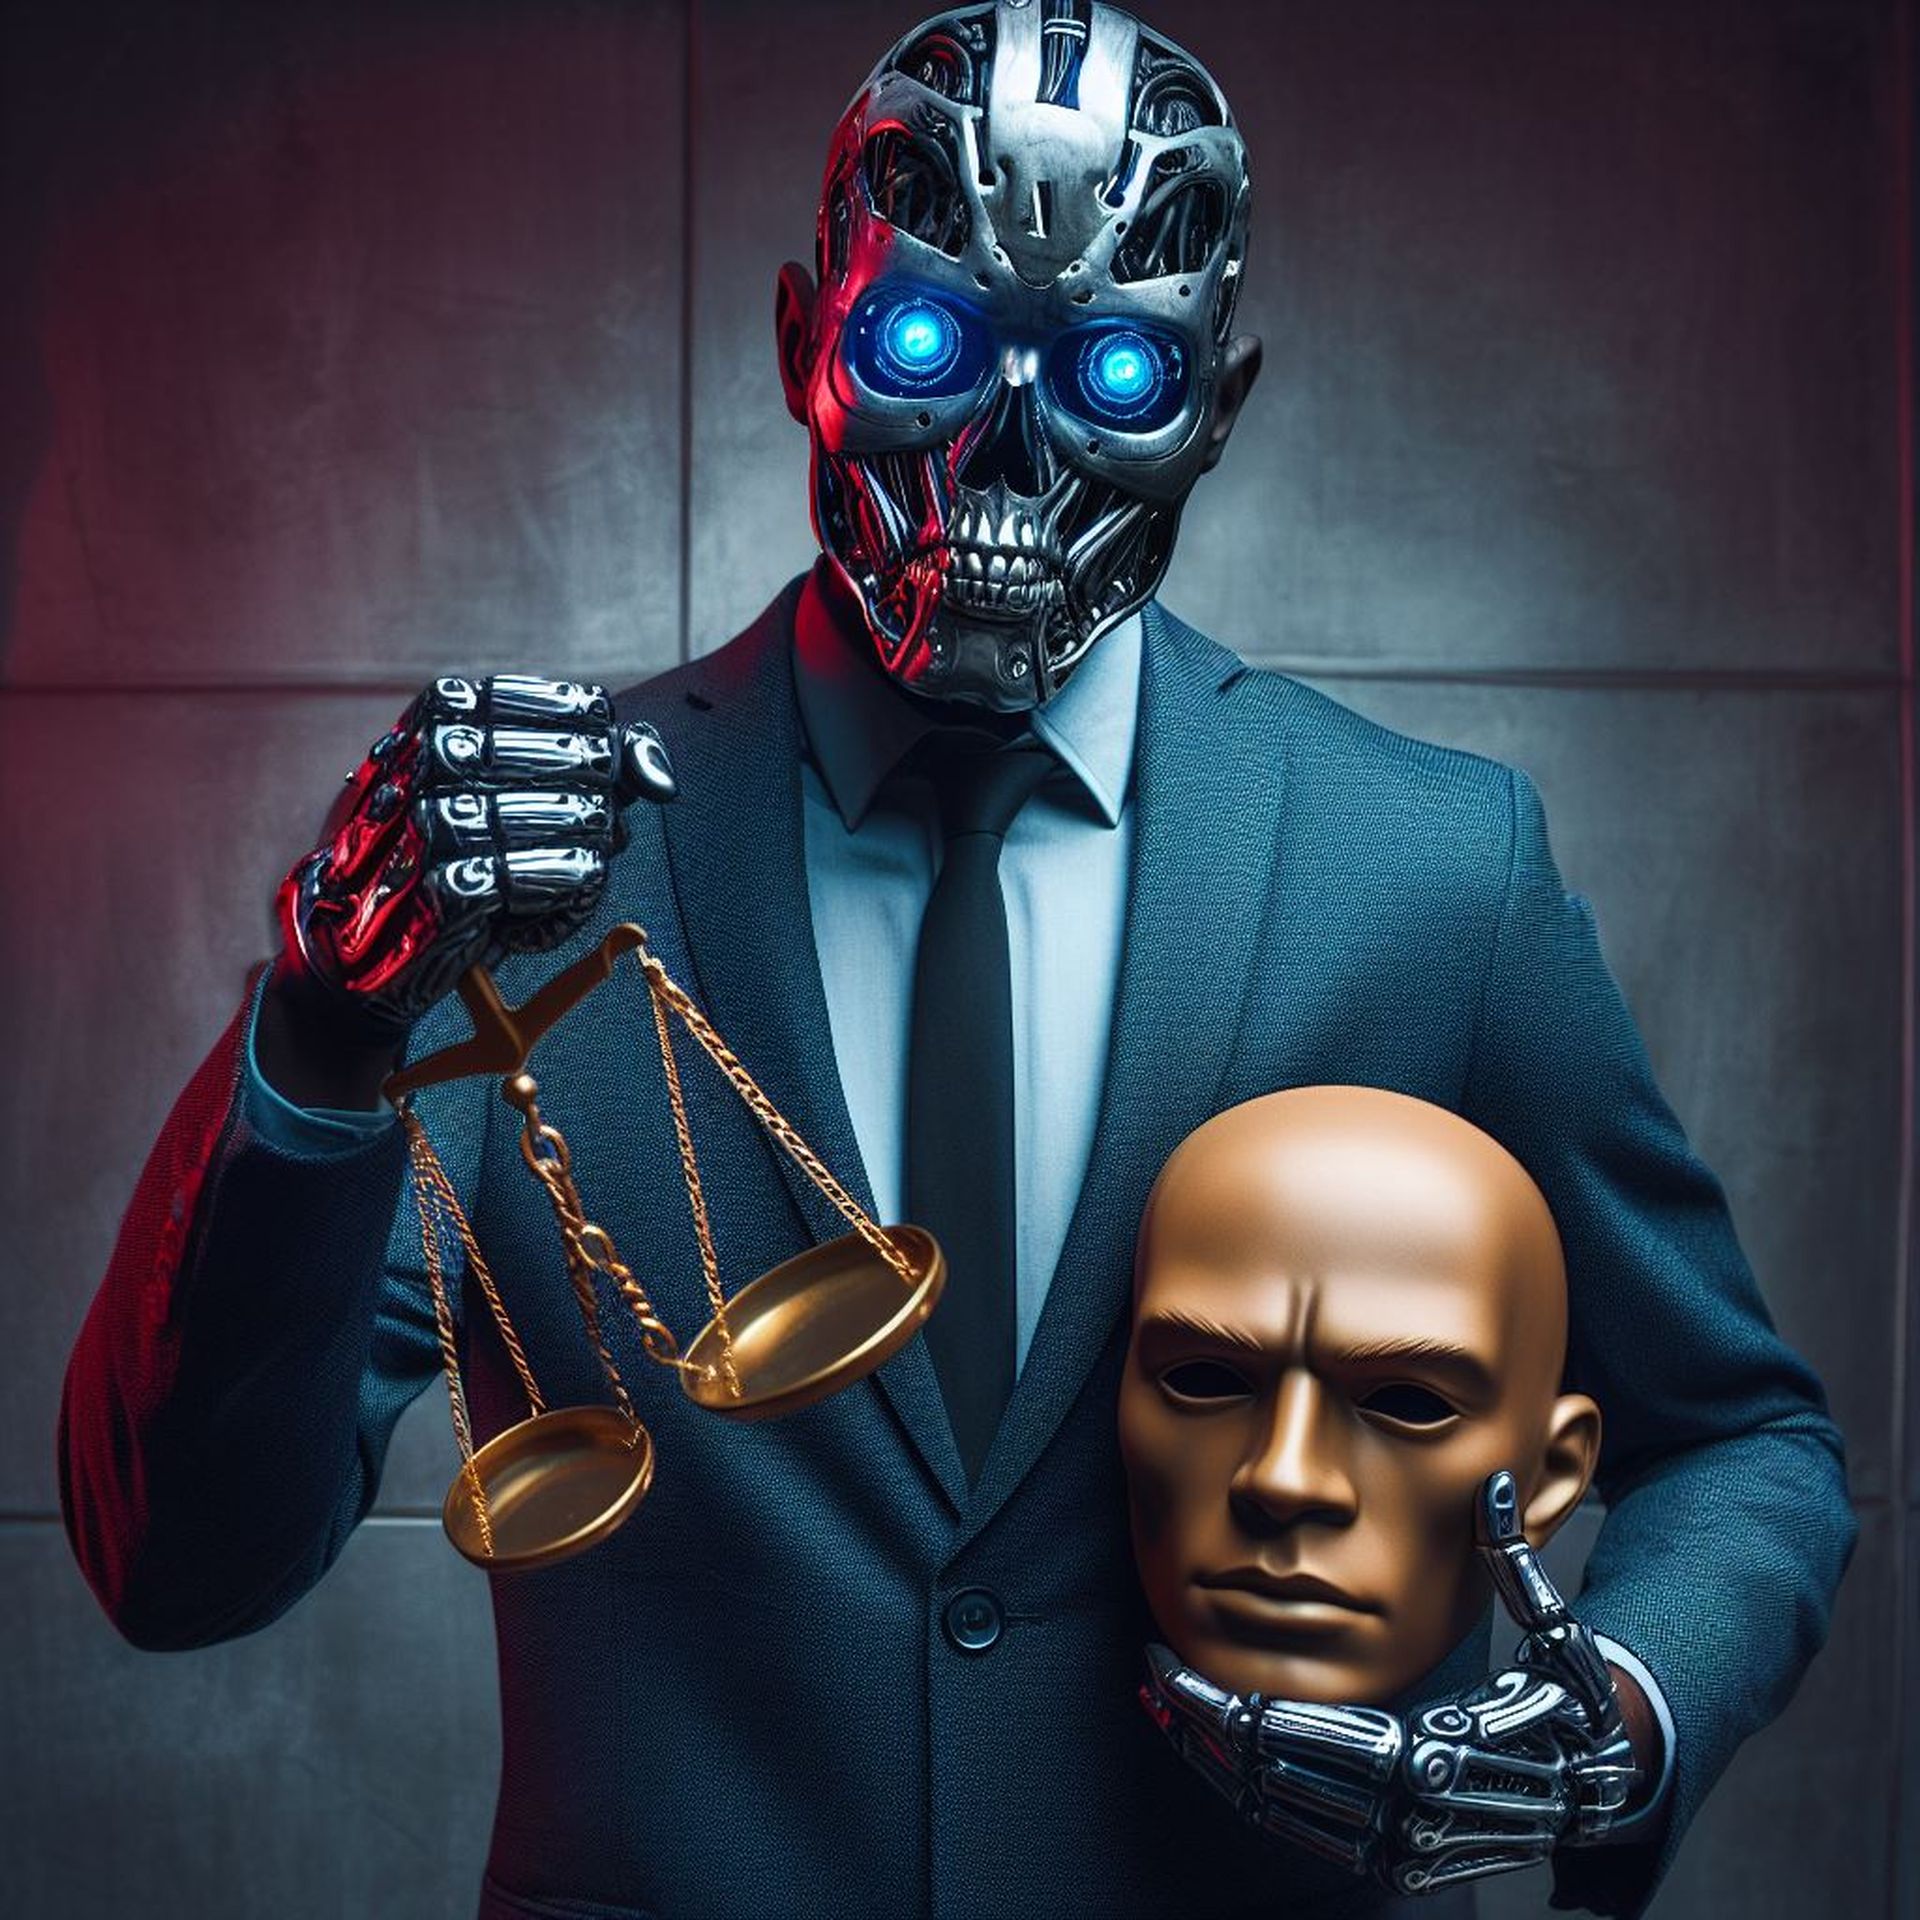 Fake AI lawyers start threatening people